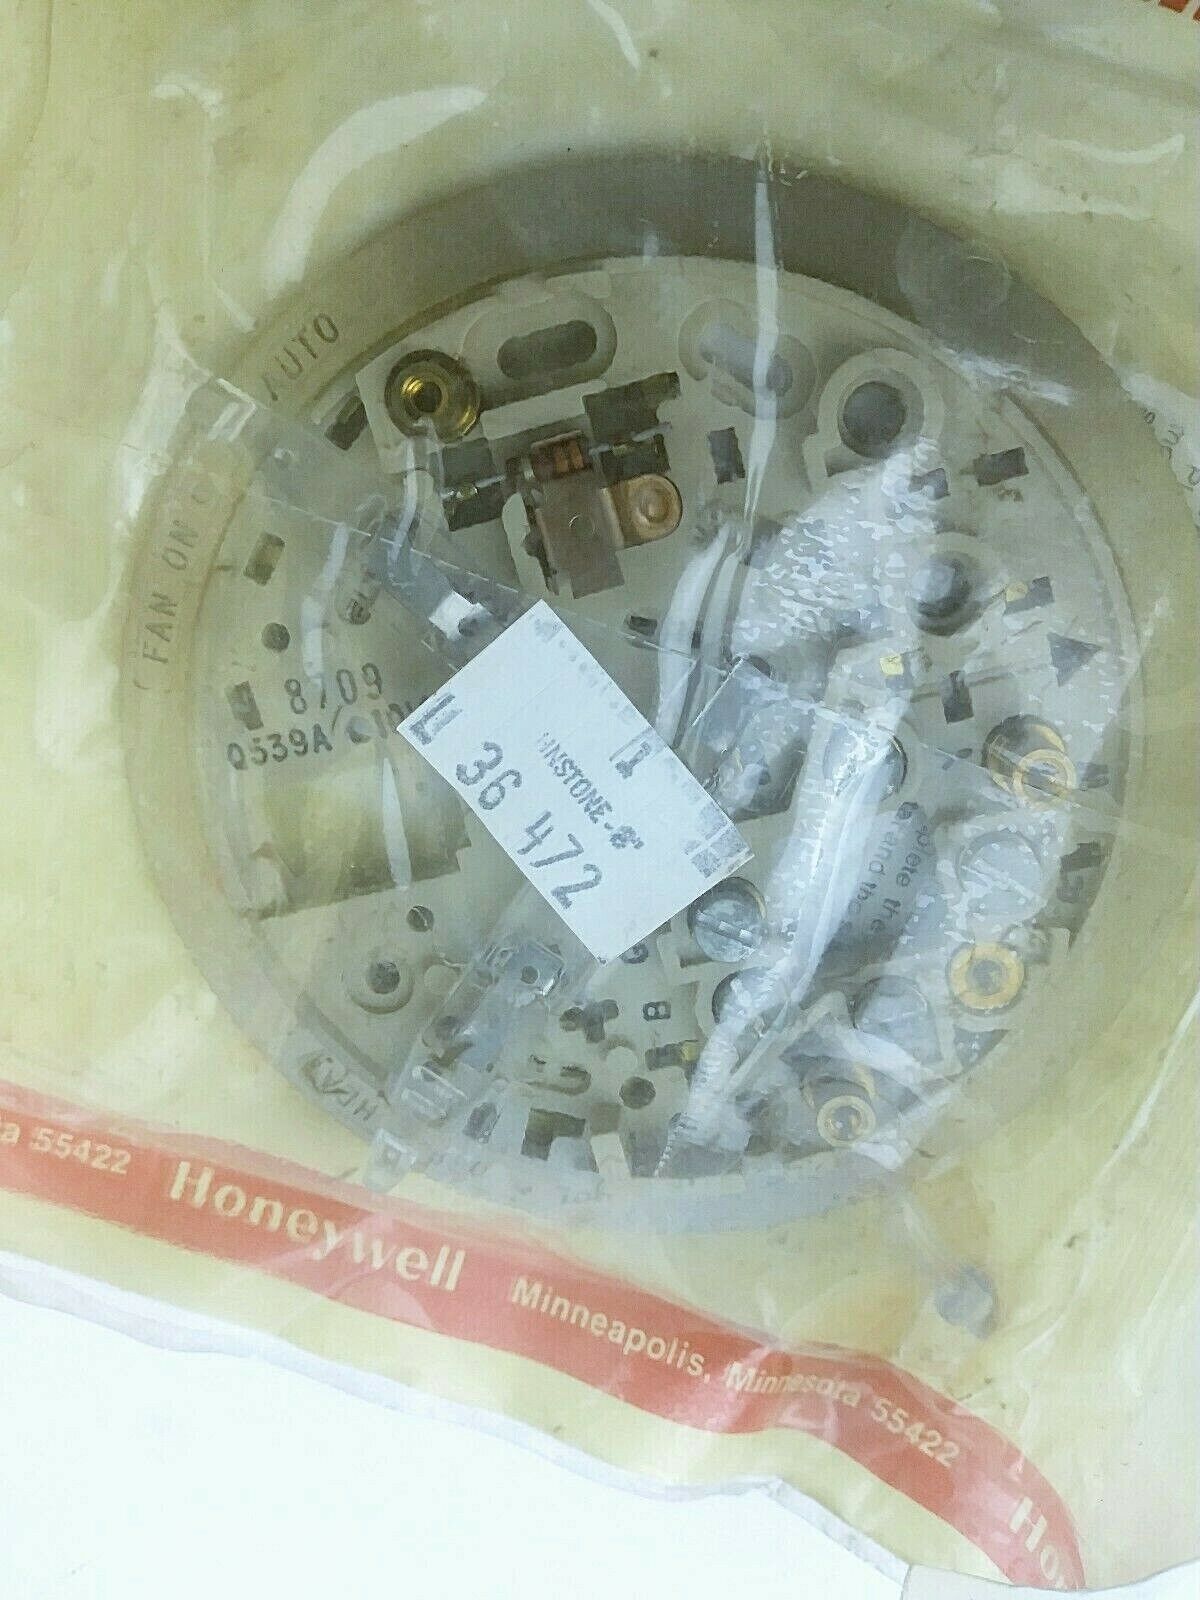 Honeywell Q539A 1014 Thermostat Subbase Tradeline 